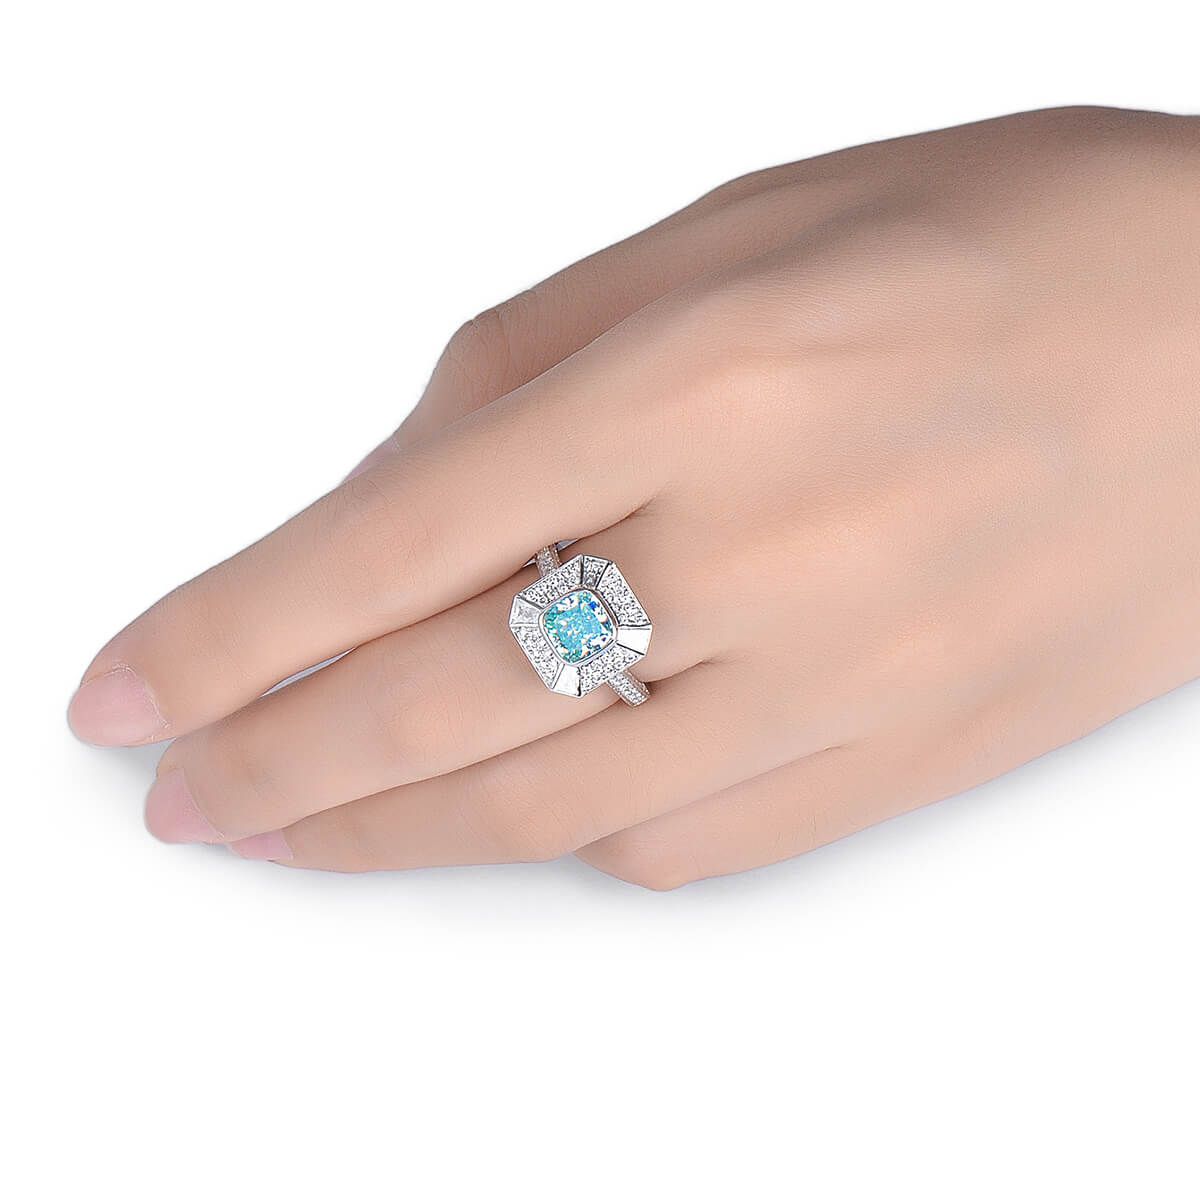 Light Green Diamond Ring, 2.01 Ct. (2.87 Ct. TW), Cushion shape, GIA Certified, 2183439941